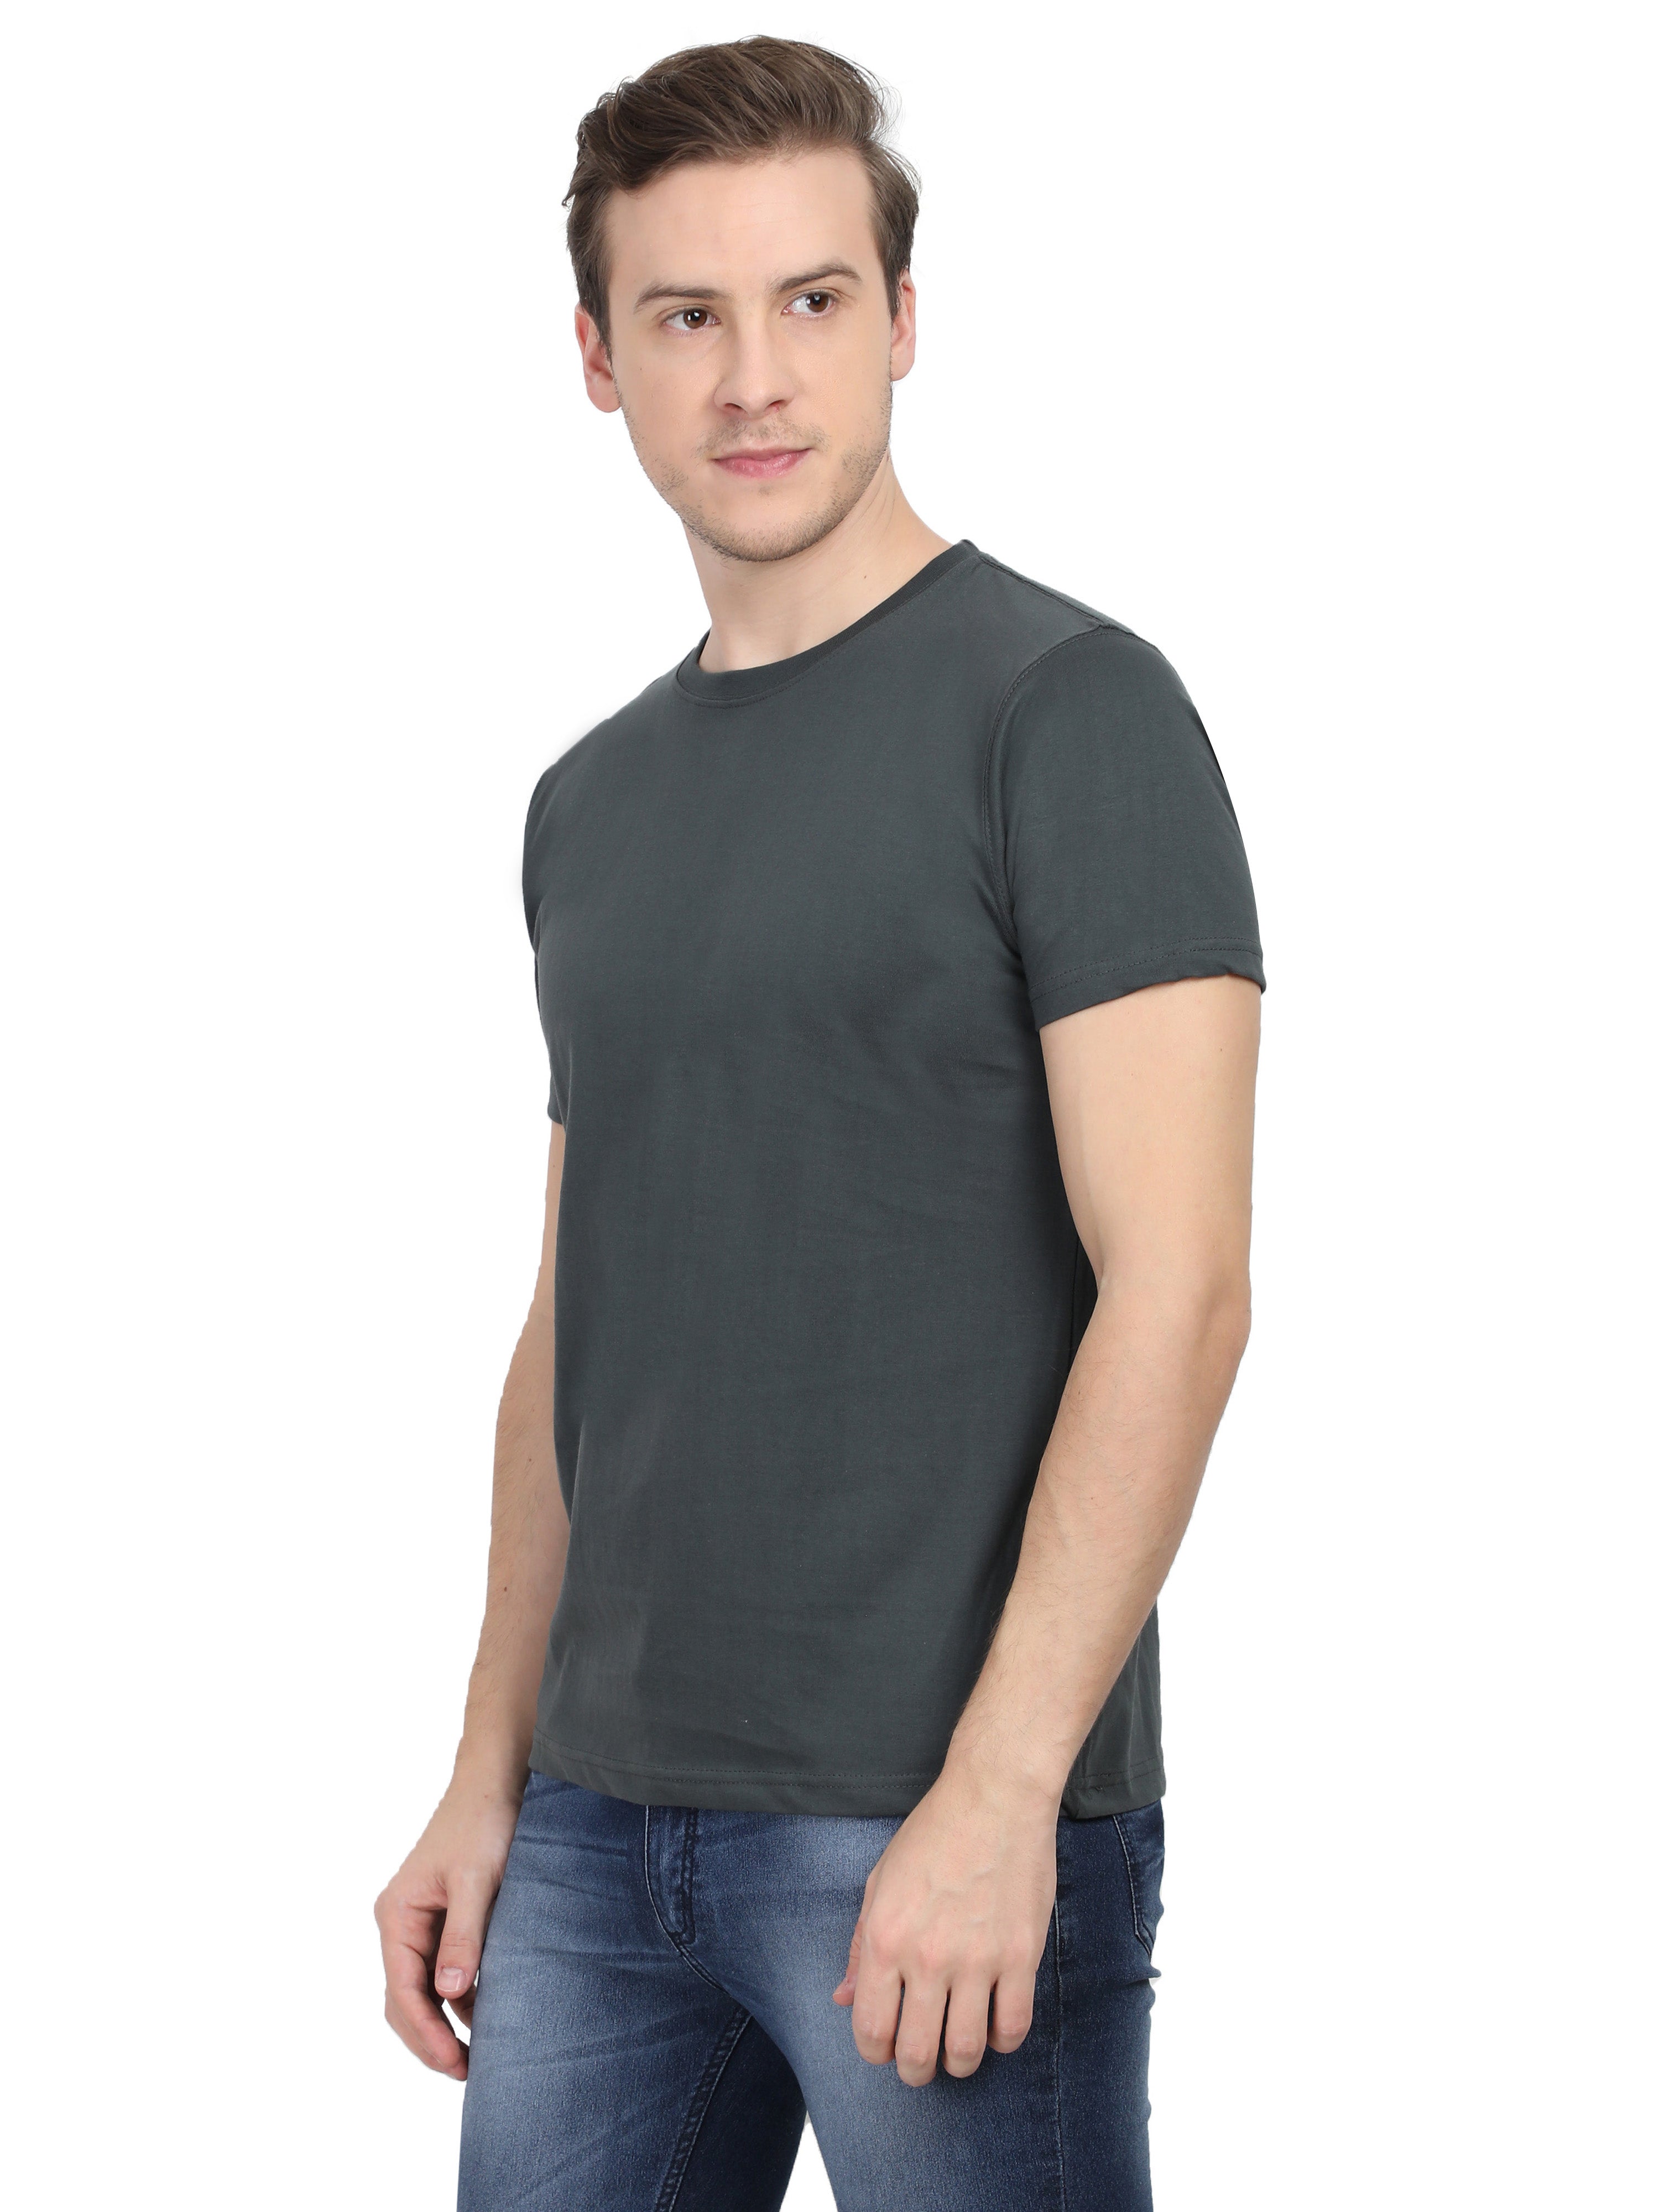 Solids: Steel Grey Premium T-shirt